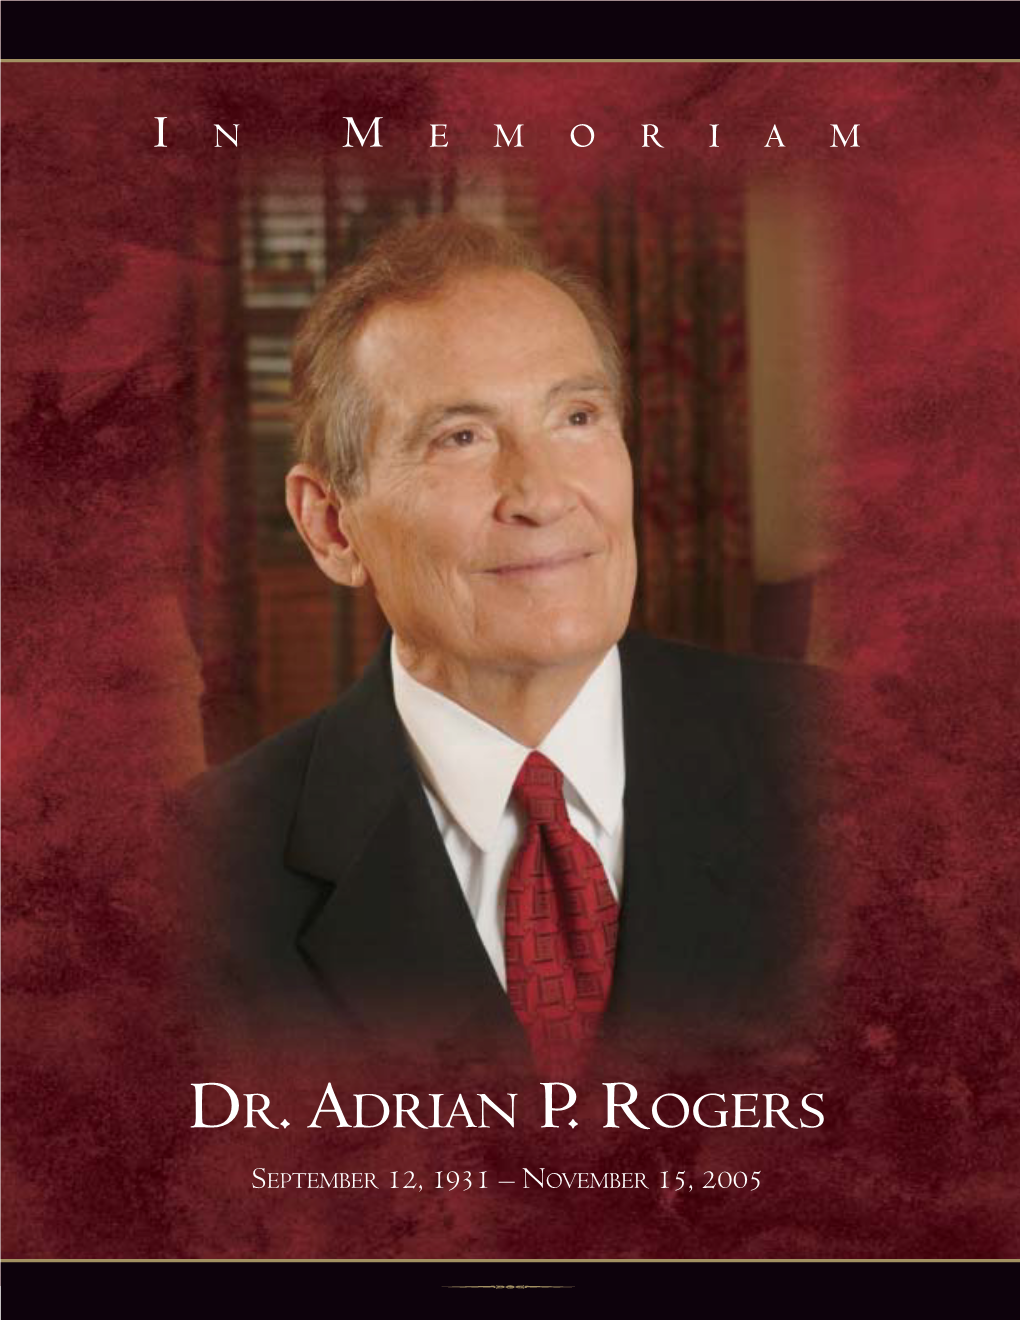 DR.ADRIAN P. ROGERS Thursday, November 17, 2005, 6:00 P.M